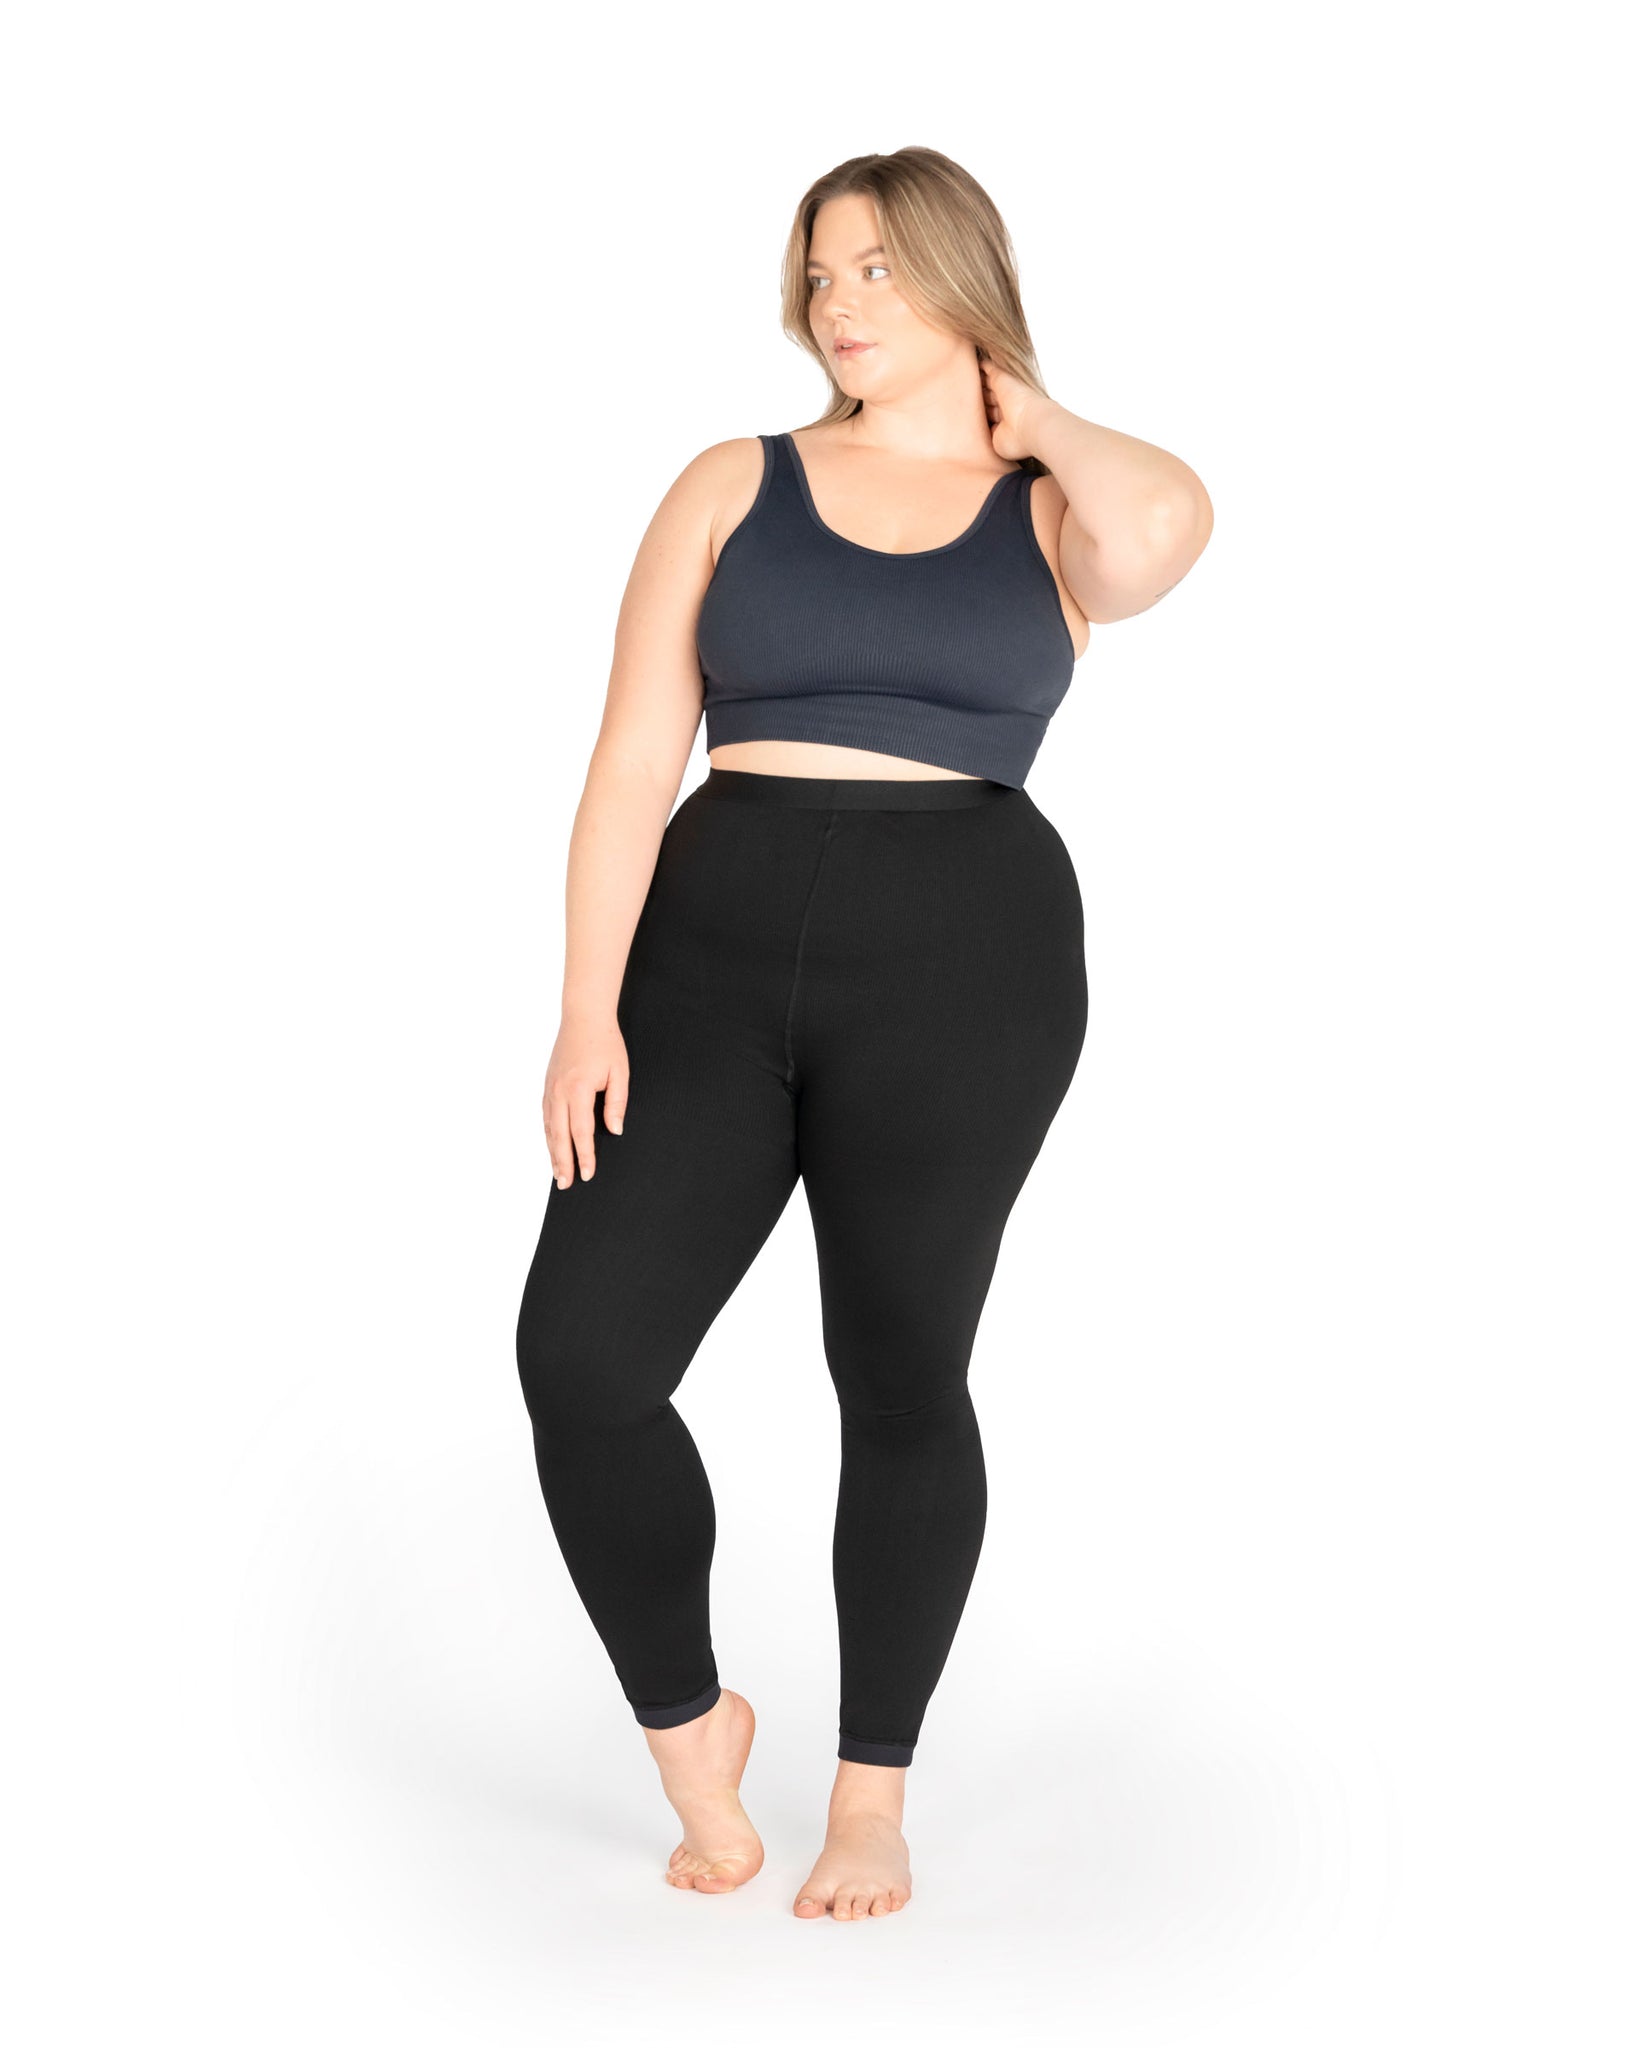 Amazon.com: VALANDY Women's High Waist Tummy Control Yoga Pants Workout  Running Sports Tights Leggings Black One Size : VALANDY: Sports & Outdoors